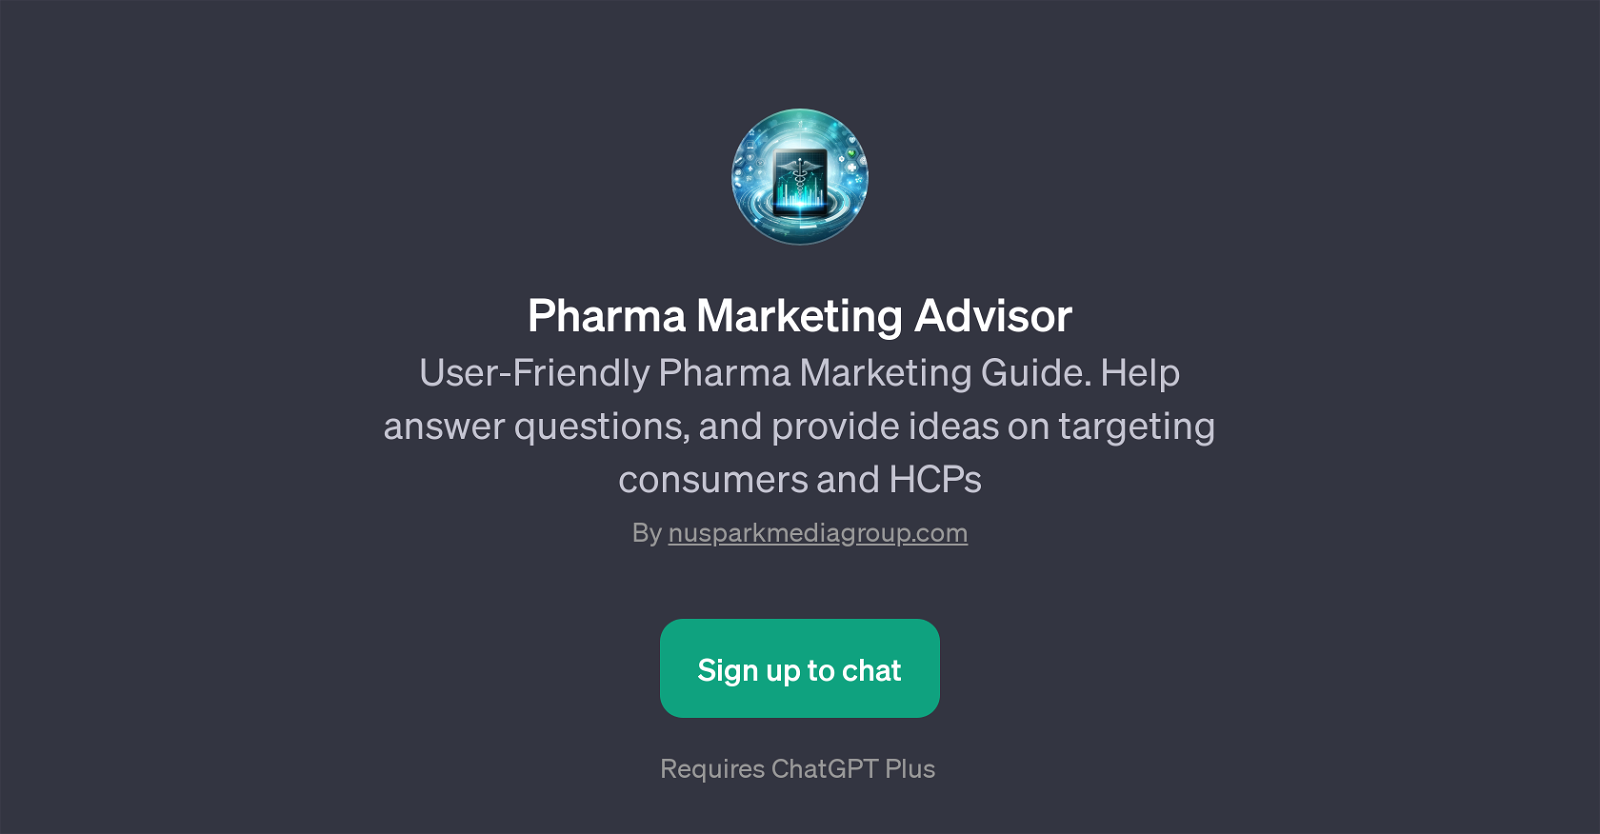 Pharma Marketing Advisor website